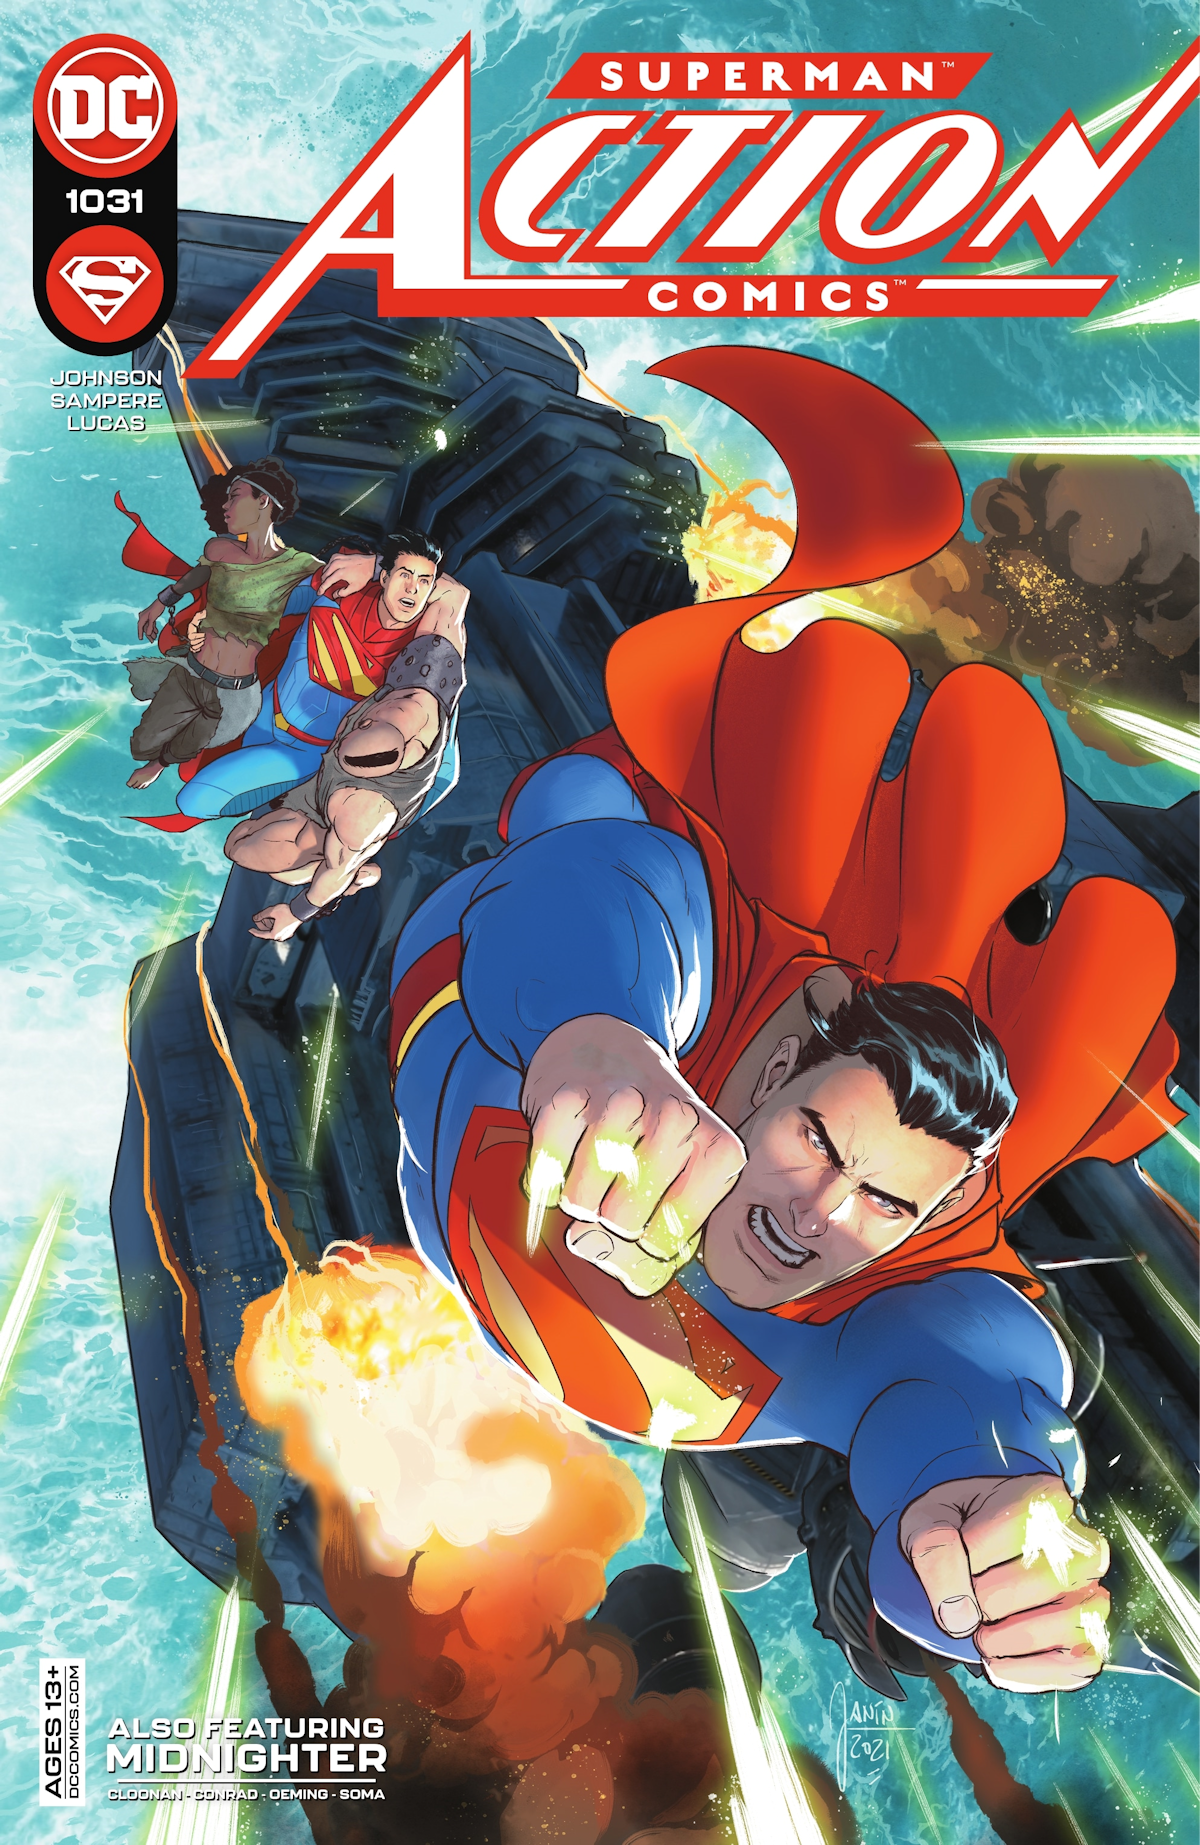 Action Comics 1031 (Cover A)